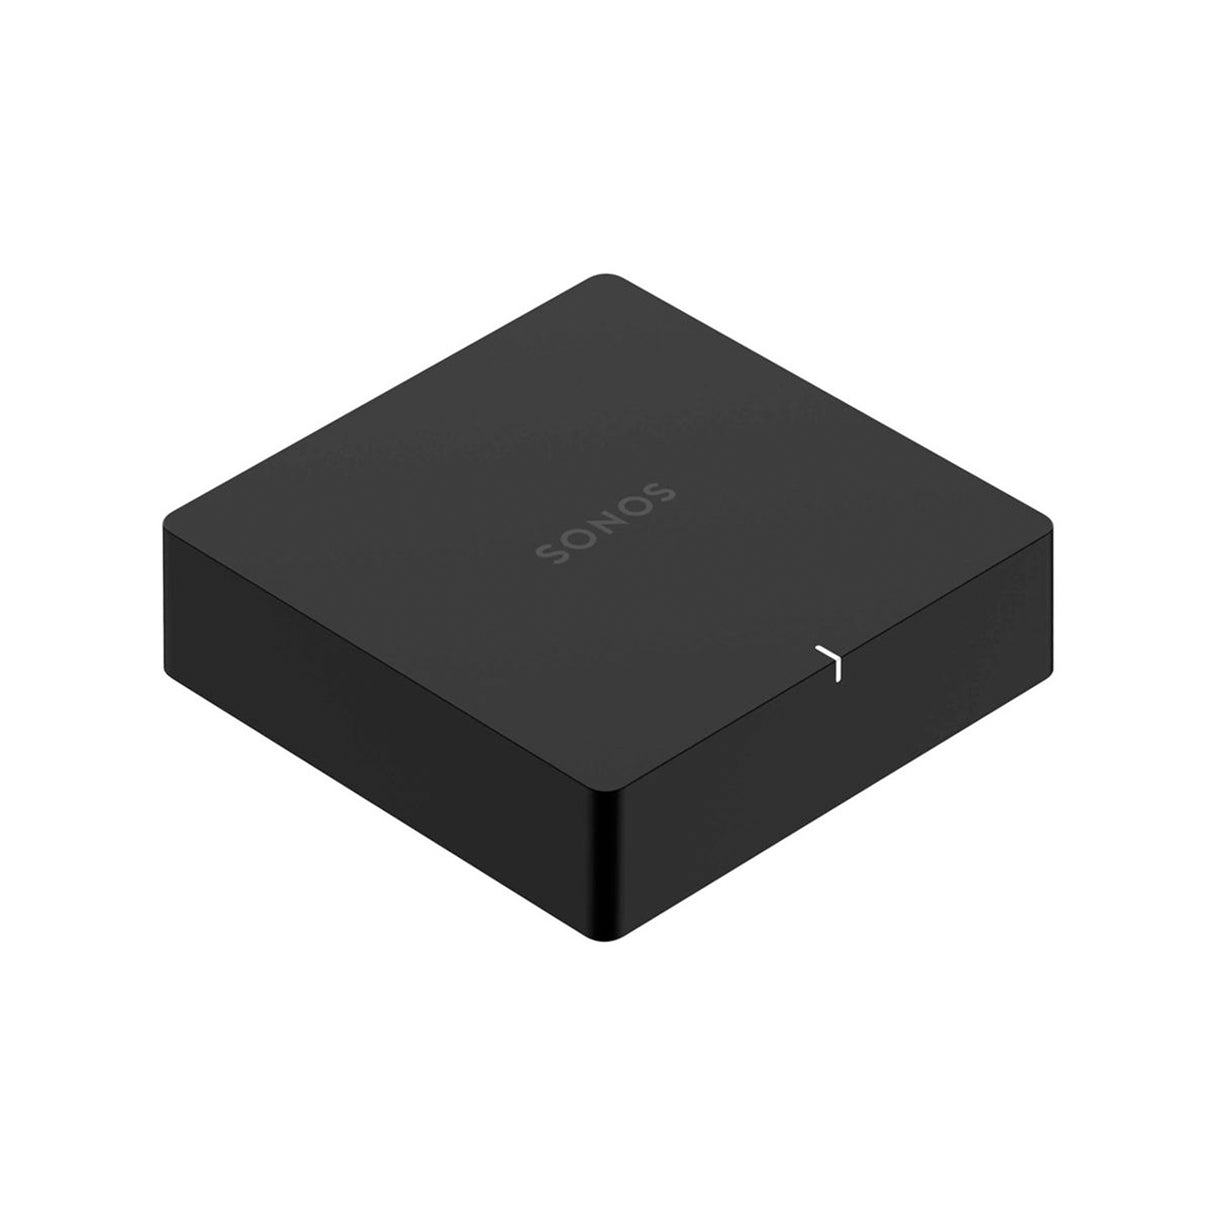 Sonos Port - Audio Streamer Player